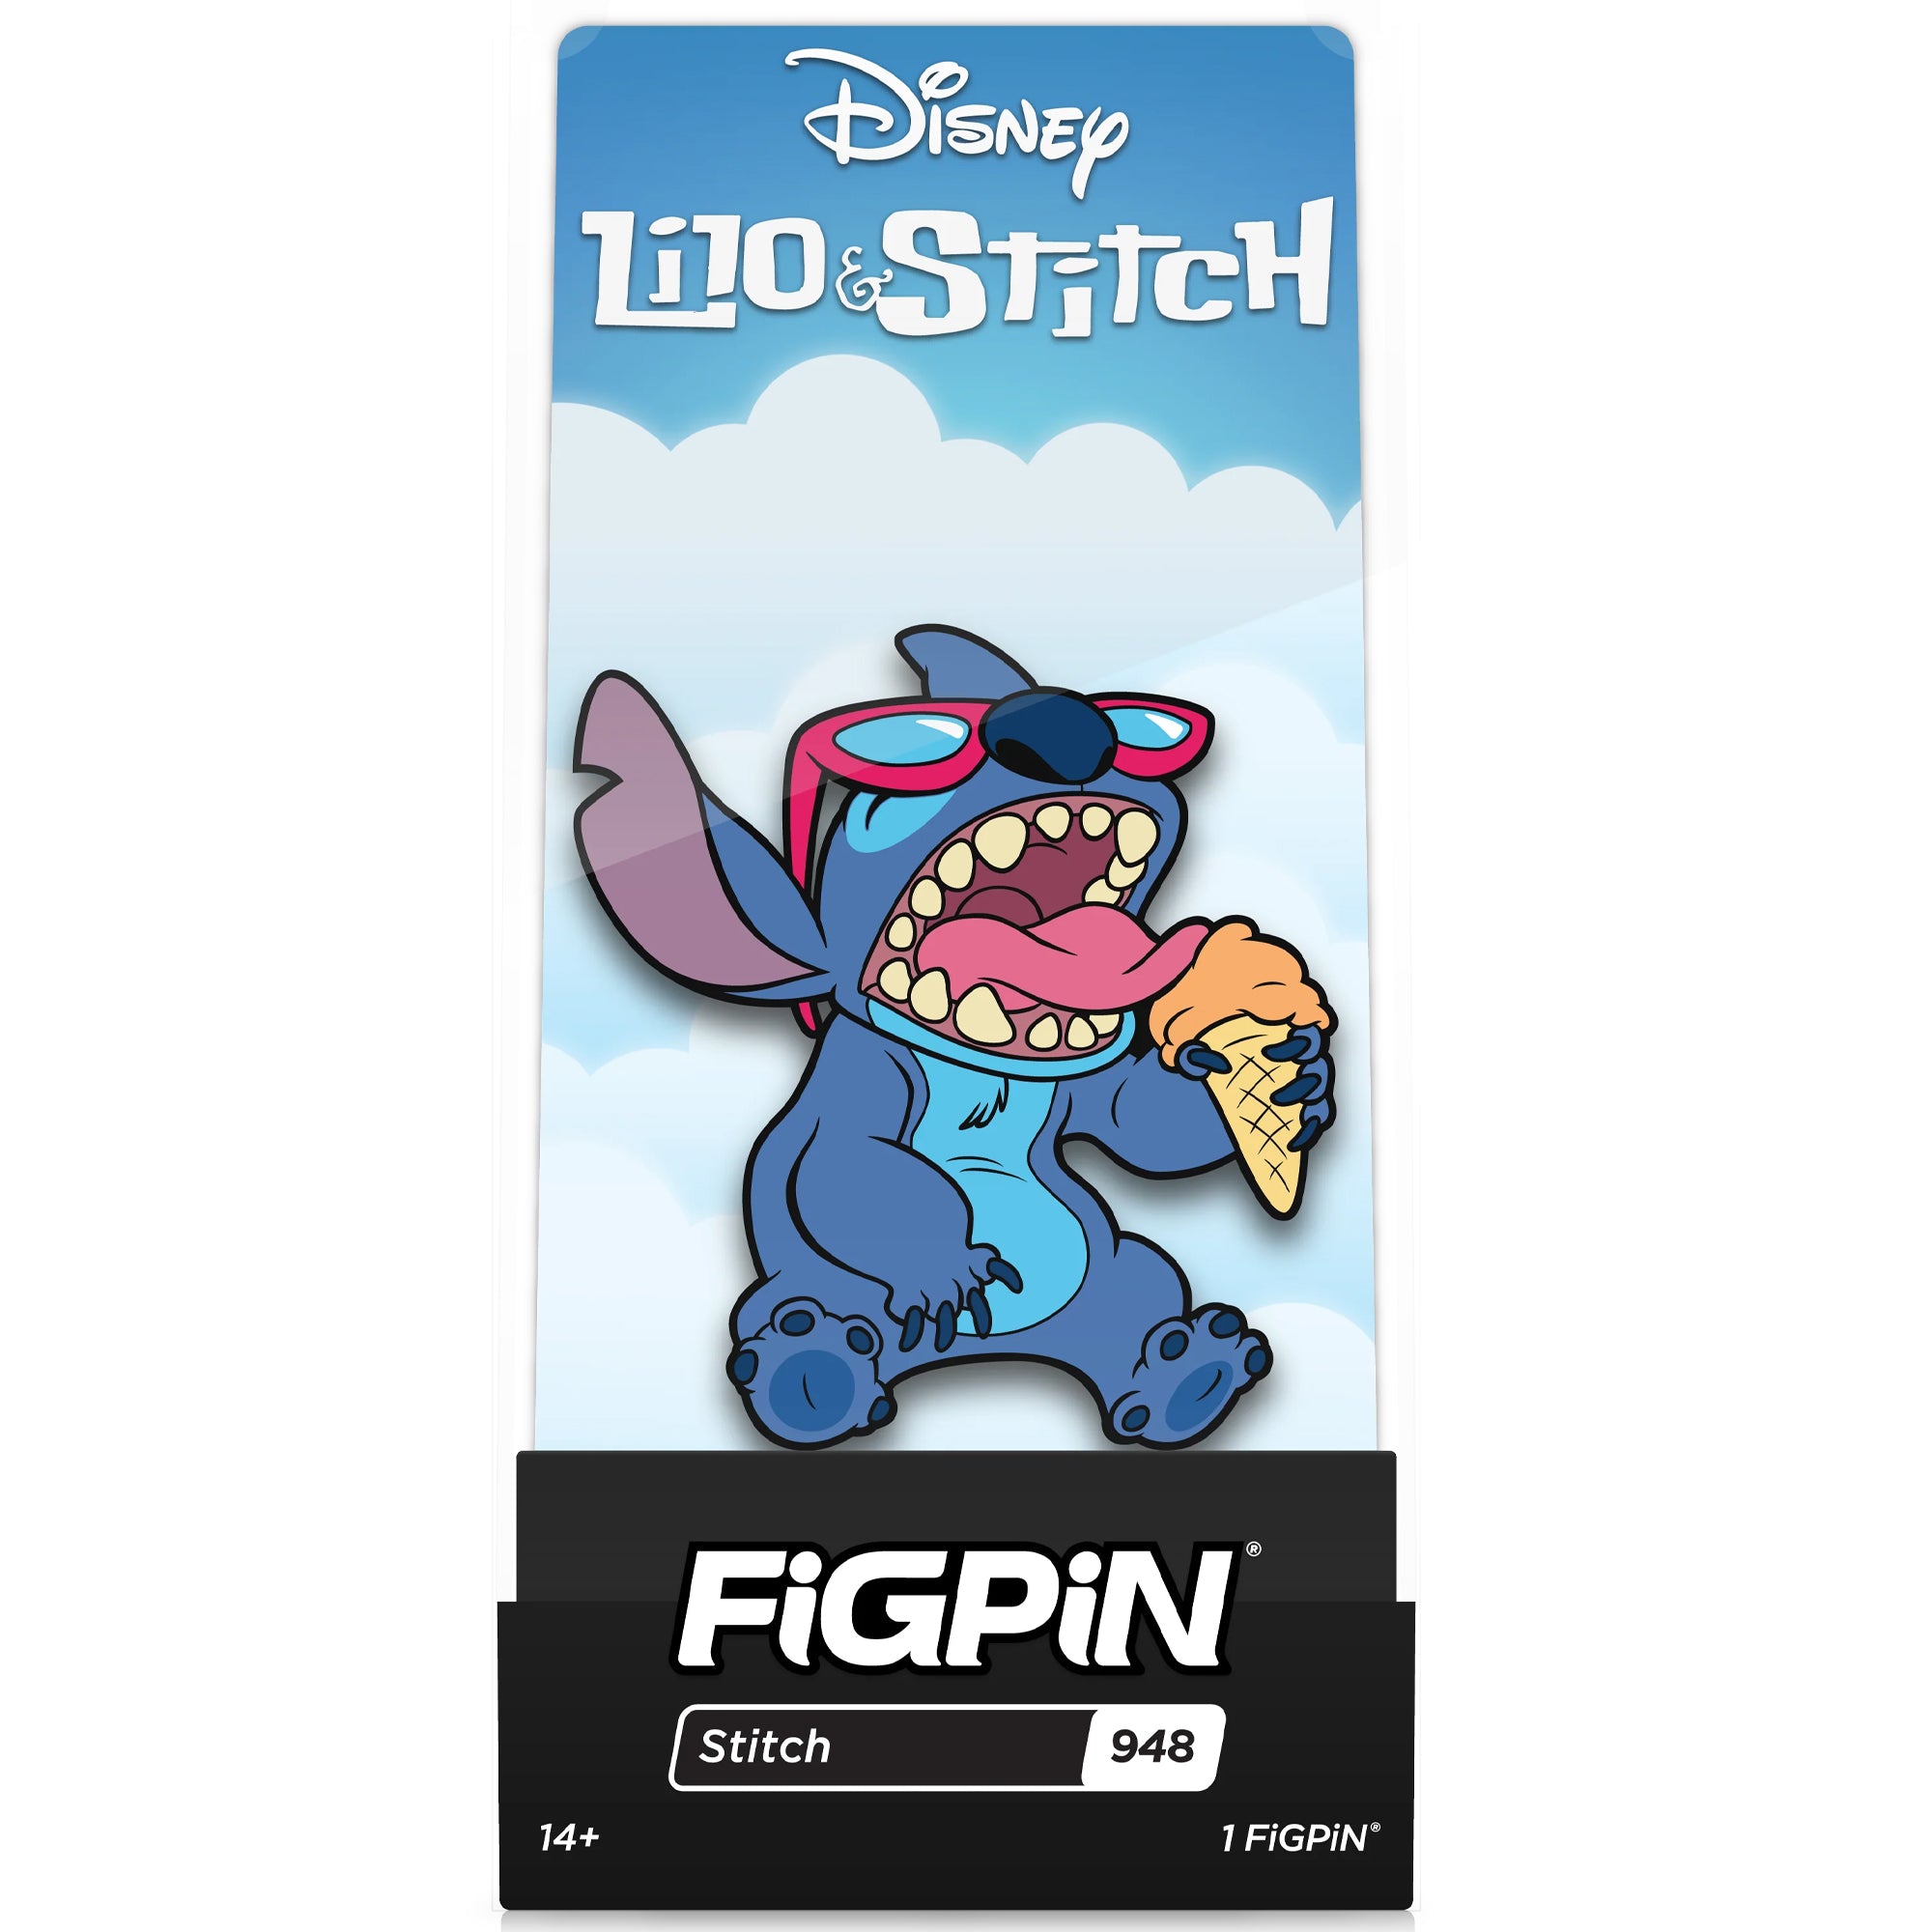 Disney Lilo and Stitch Stitch 3" Collectible Pin #948